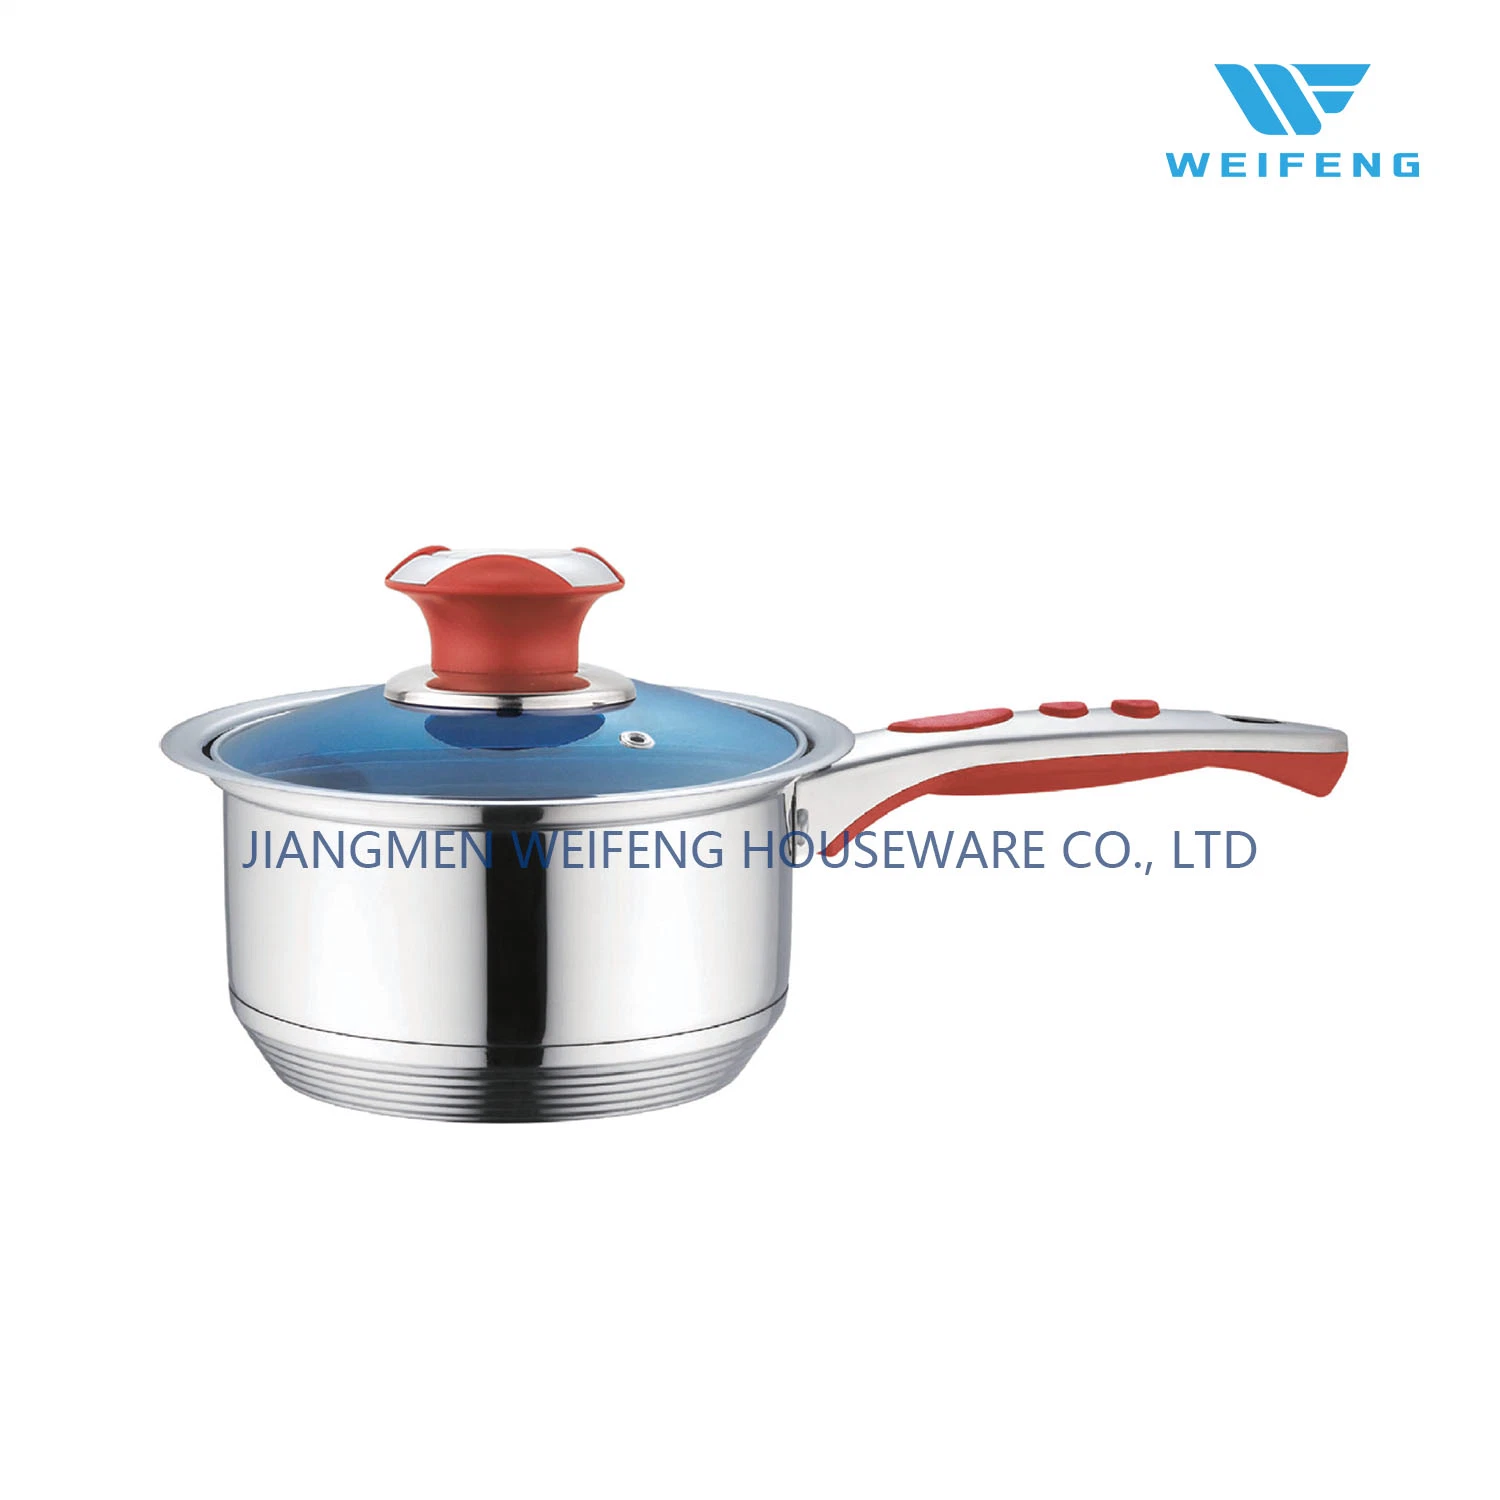 13PCS Wholesale/Supplier Custom Kitchen Utensils Ware Kitchenware Wide Edge Stainless Steel Cookware Set with Red Bakelite Combination Handles